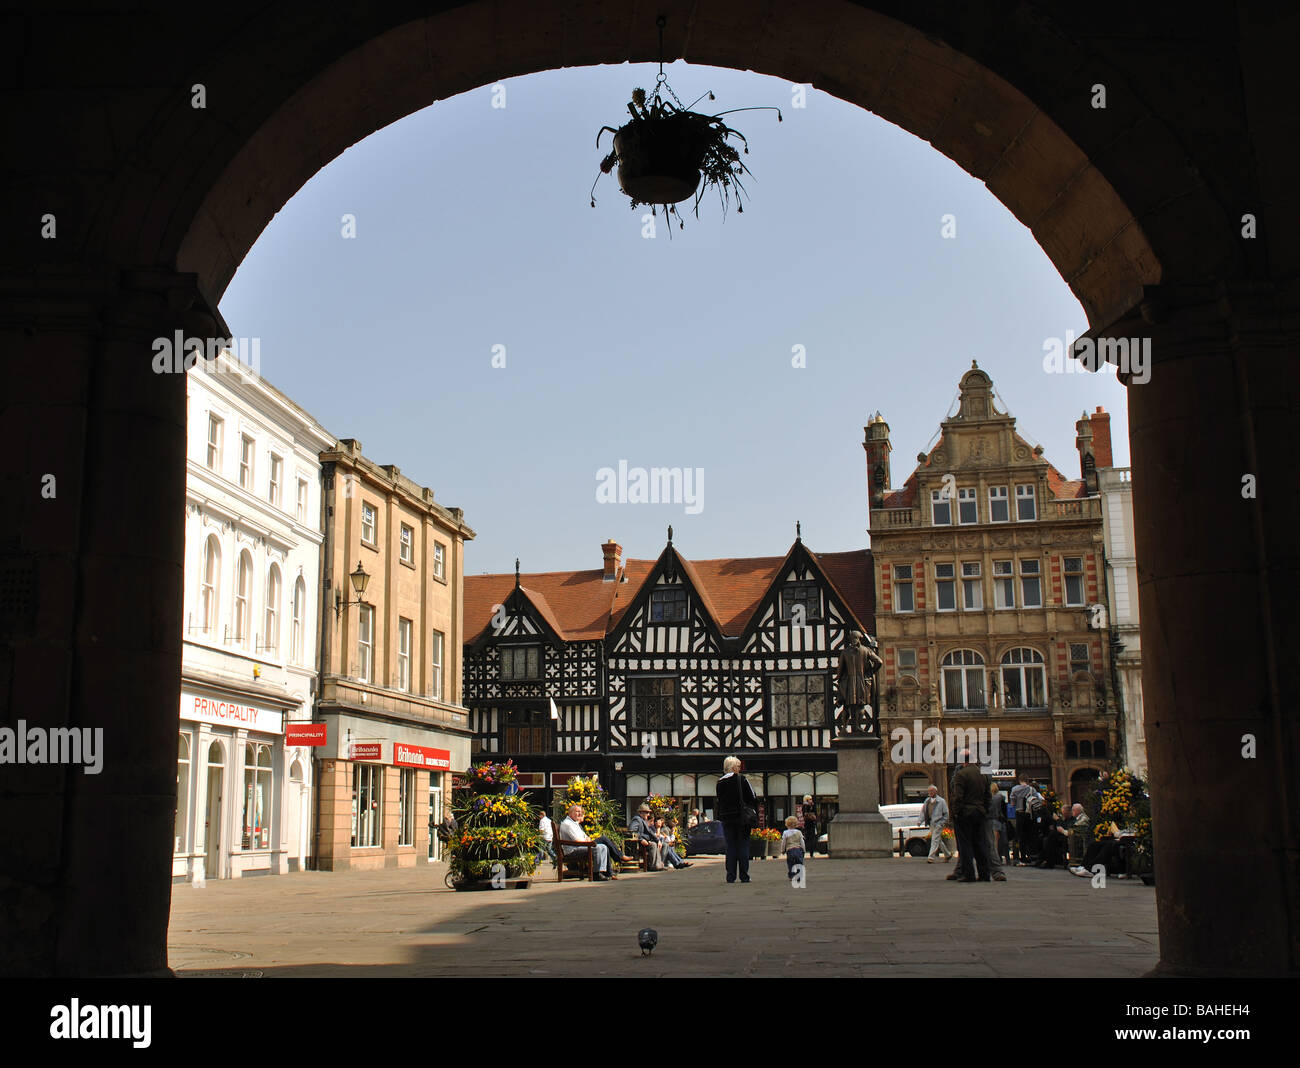 Das Quadrat und High Street, Shrewsbury, Shropshire, England, UK Stockfoto